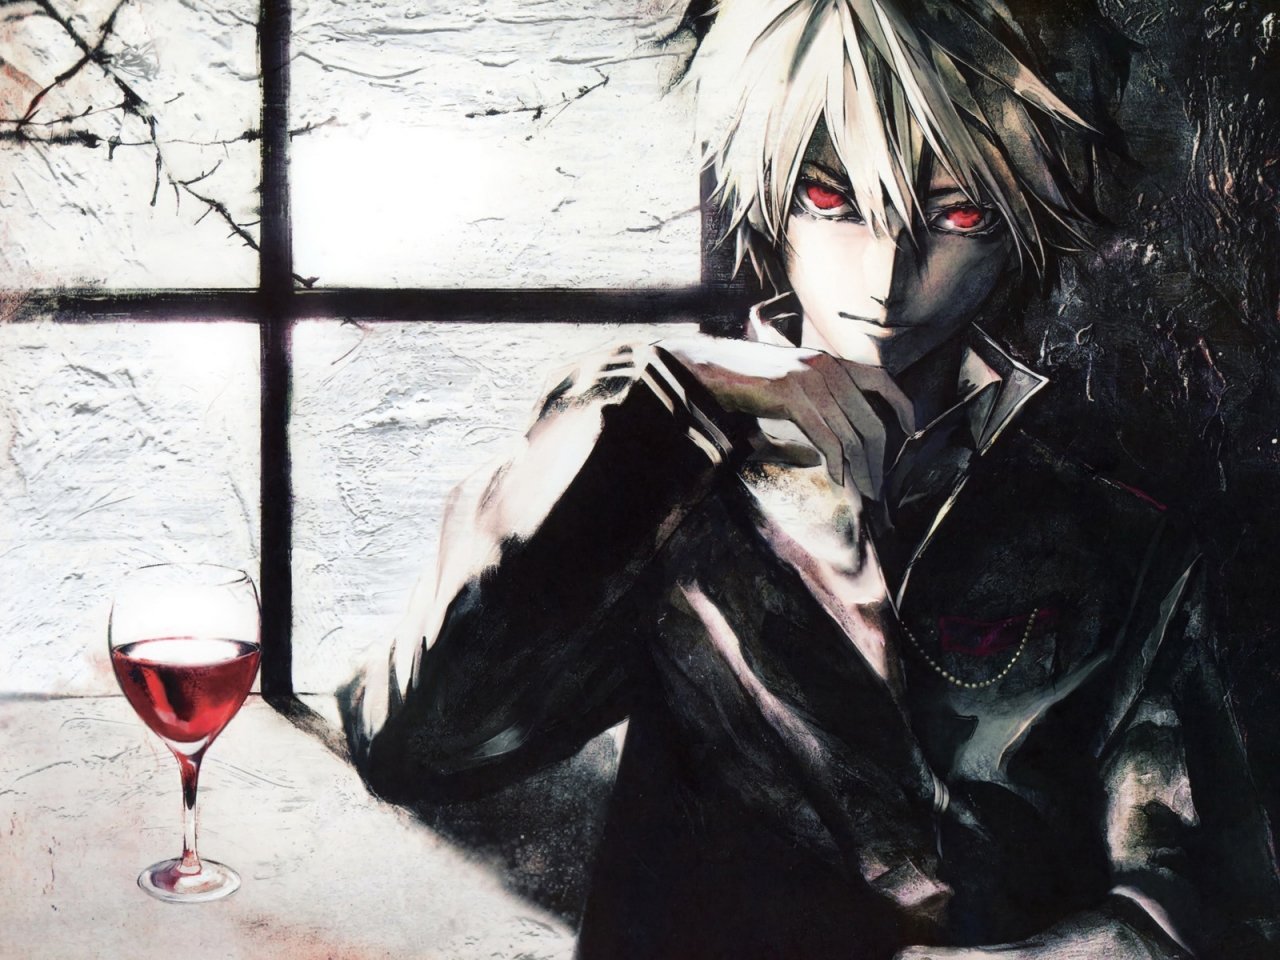 Anime Boy and Wine Wallpaper 1280x960 wallpaperherejpg 1280x960